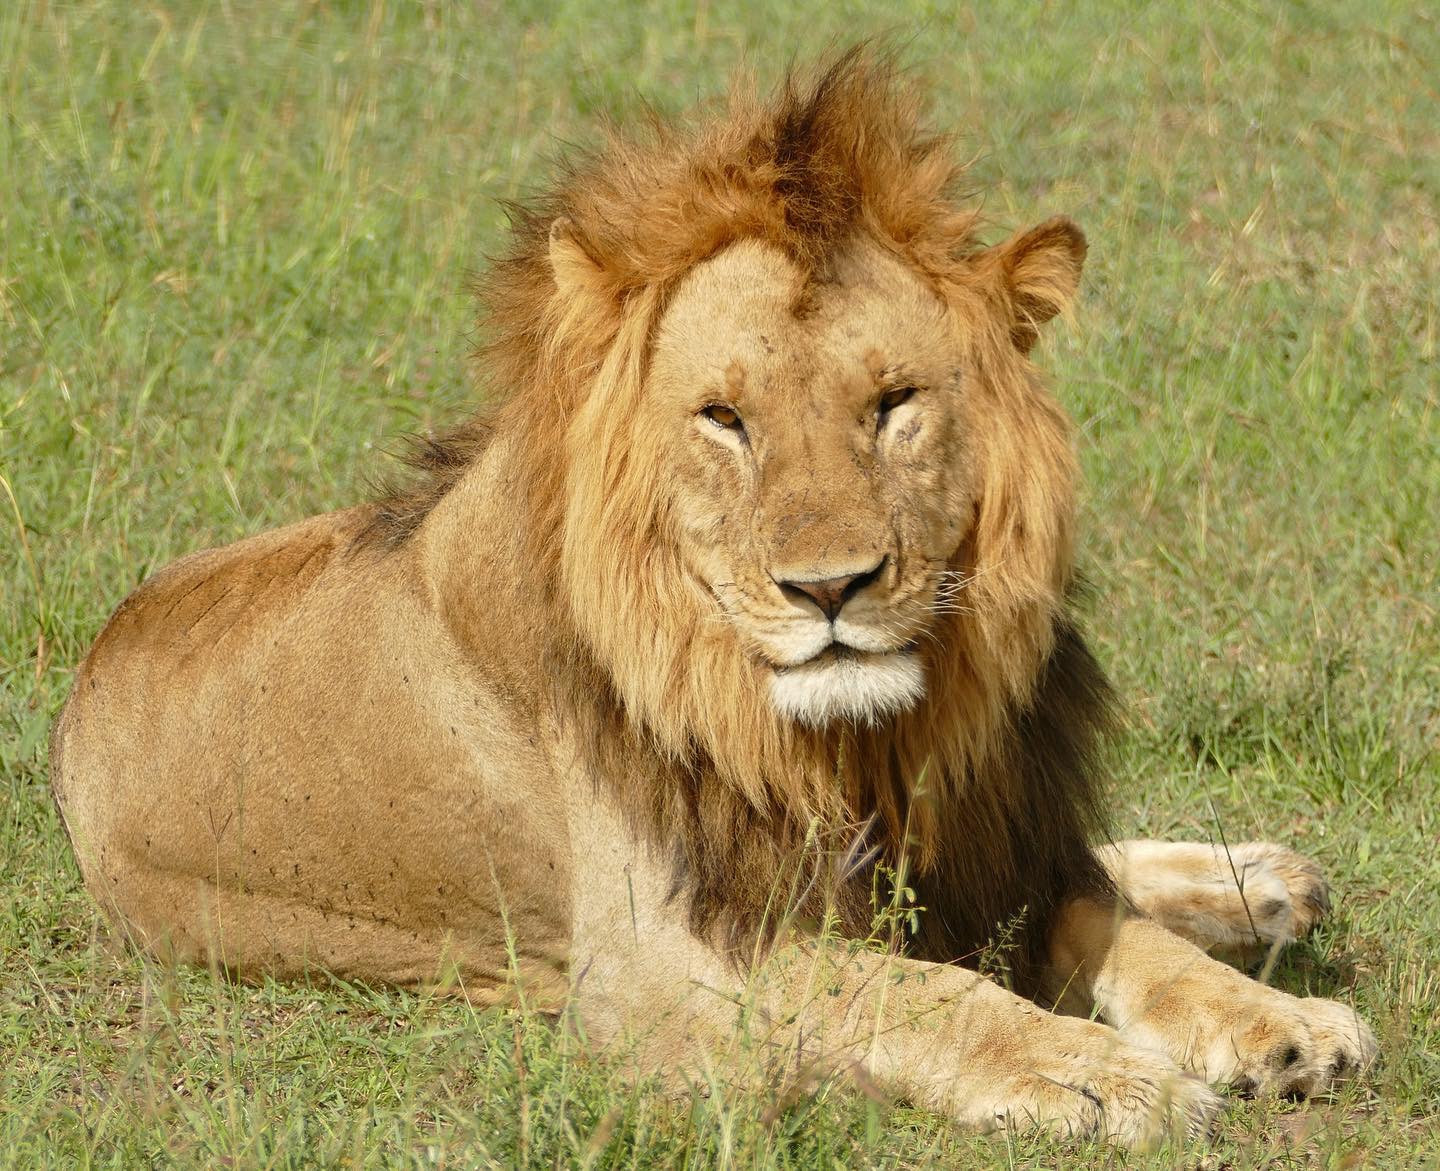 Image Slider No: 7 7 Days Luxury Tanzania Safari